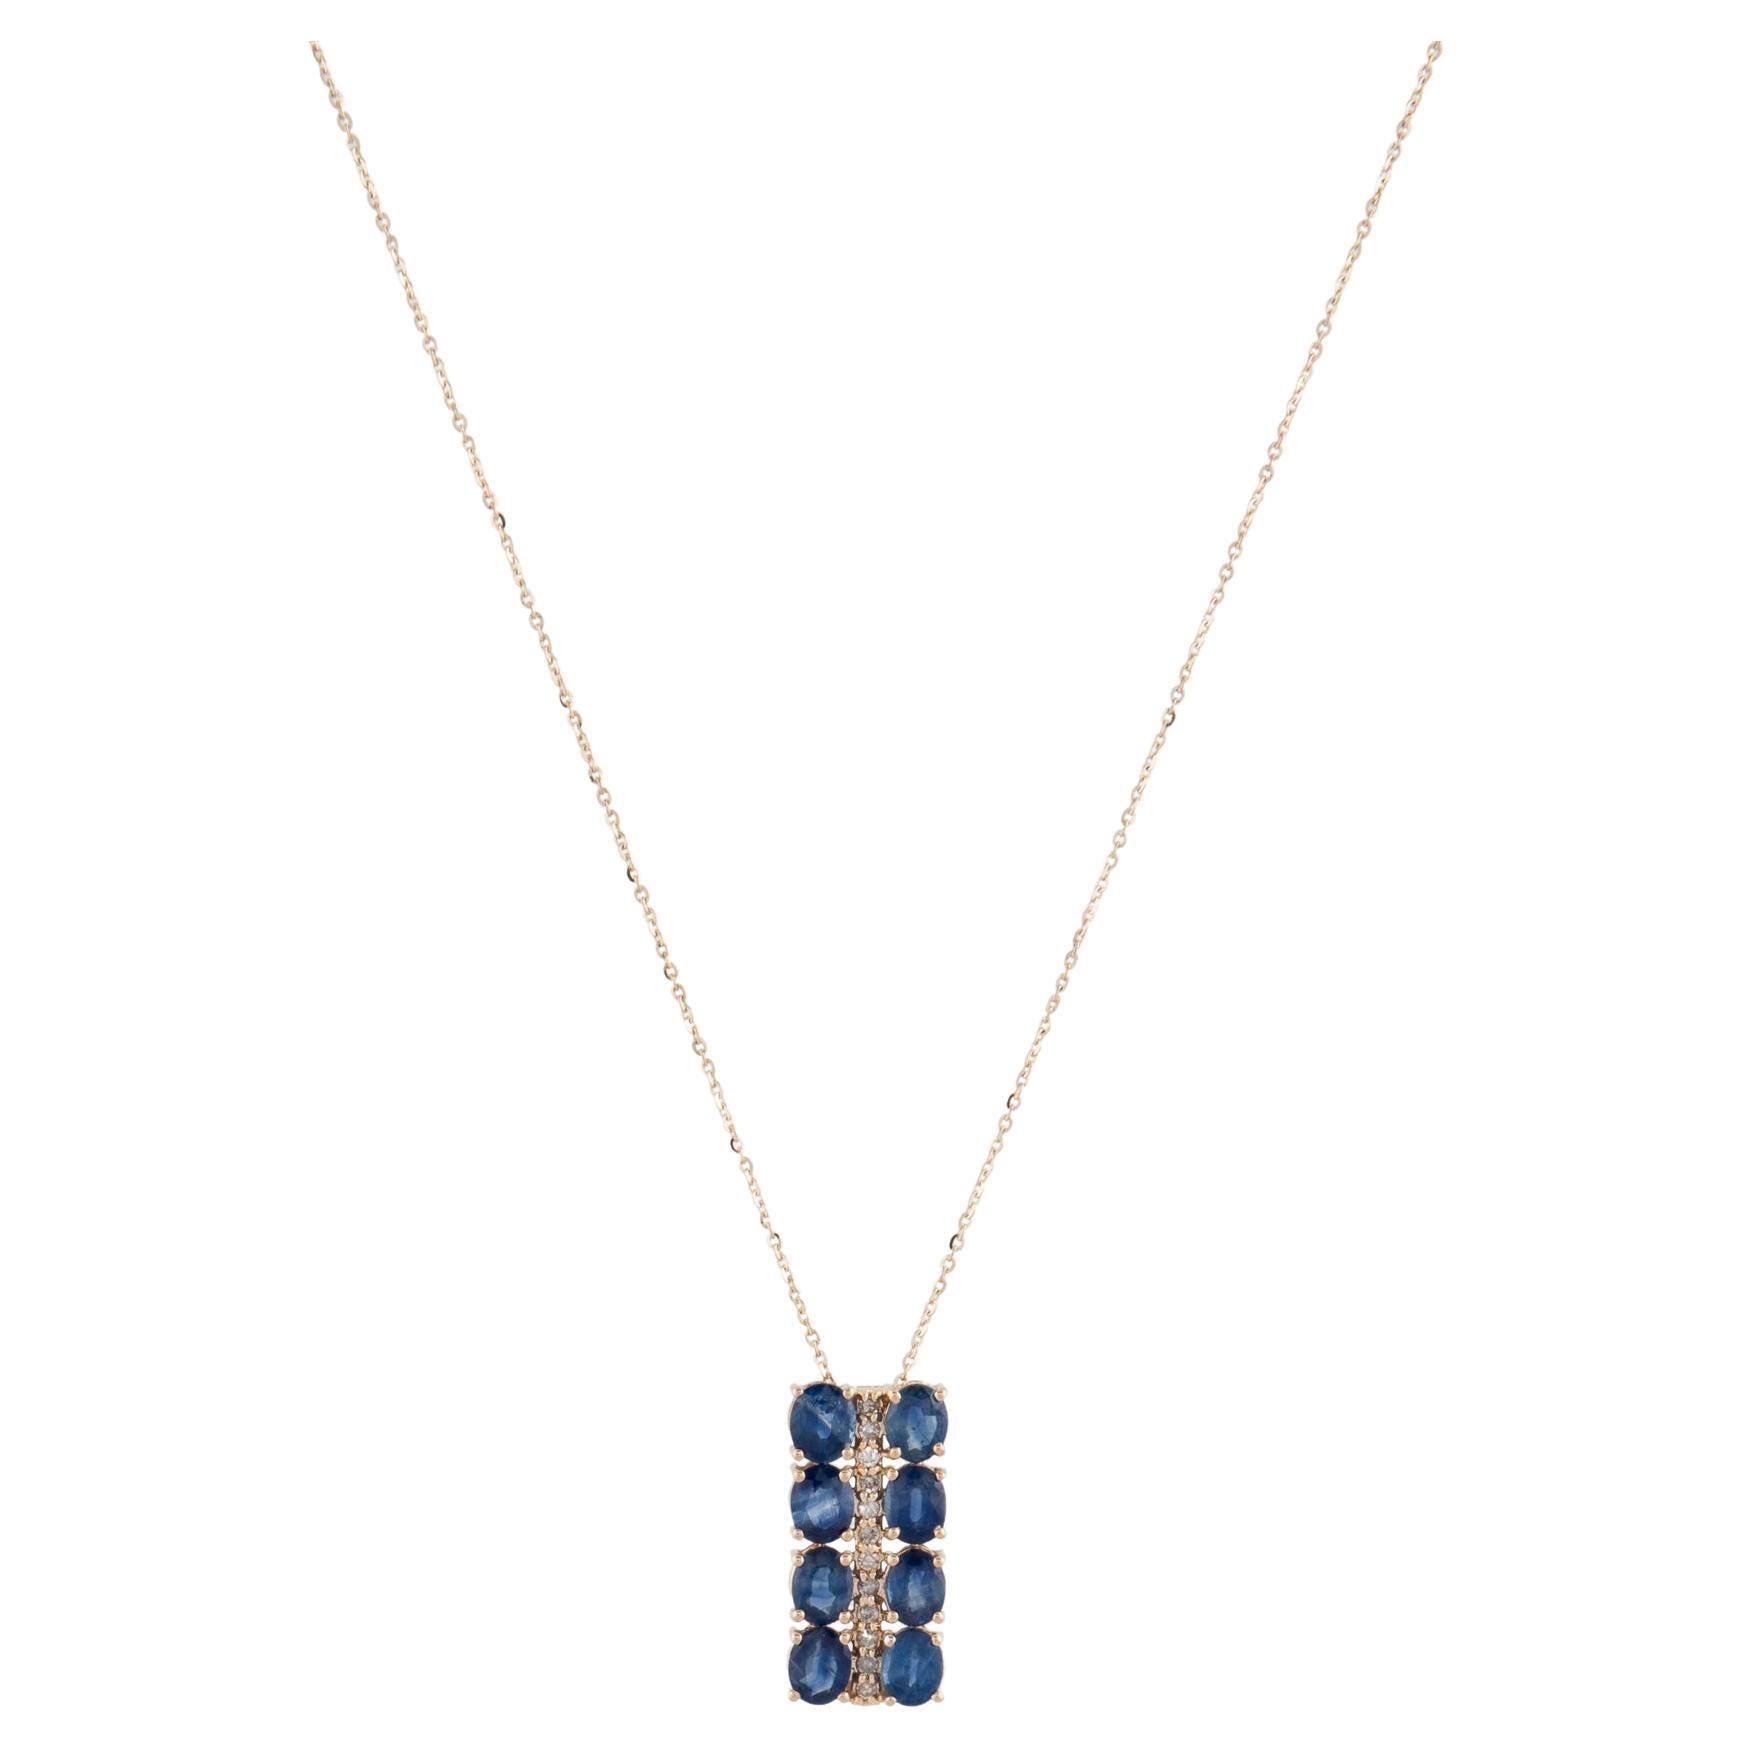 14K 3.78ctw Sapphire & Diamond Pendant Necklace: Luxury Statement Jewelry Piece For Sale